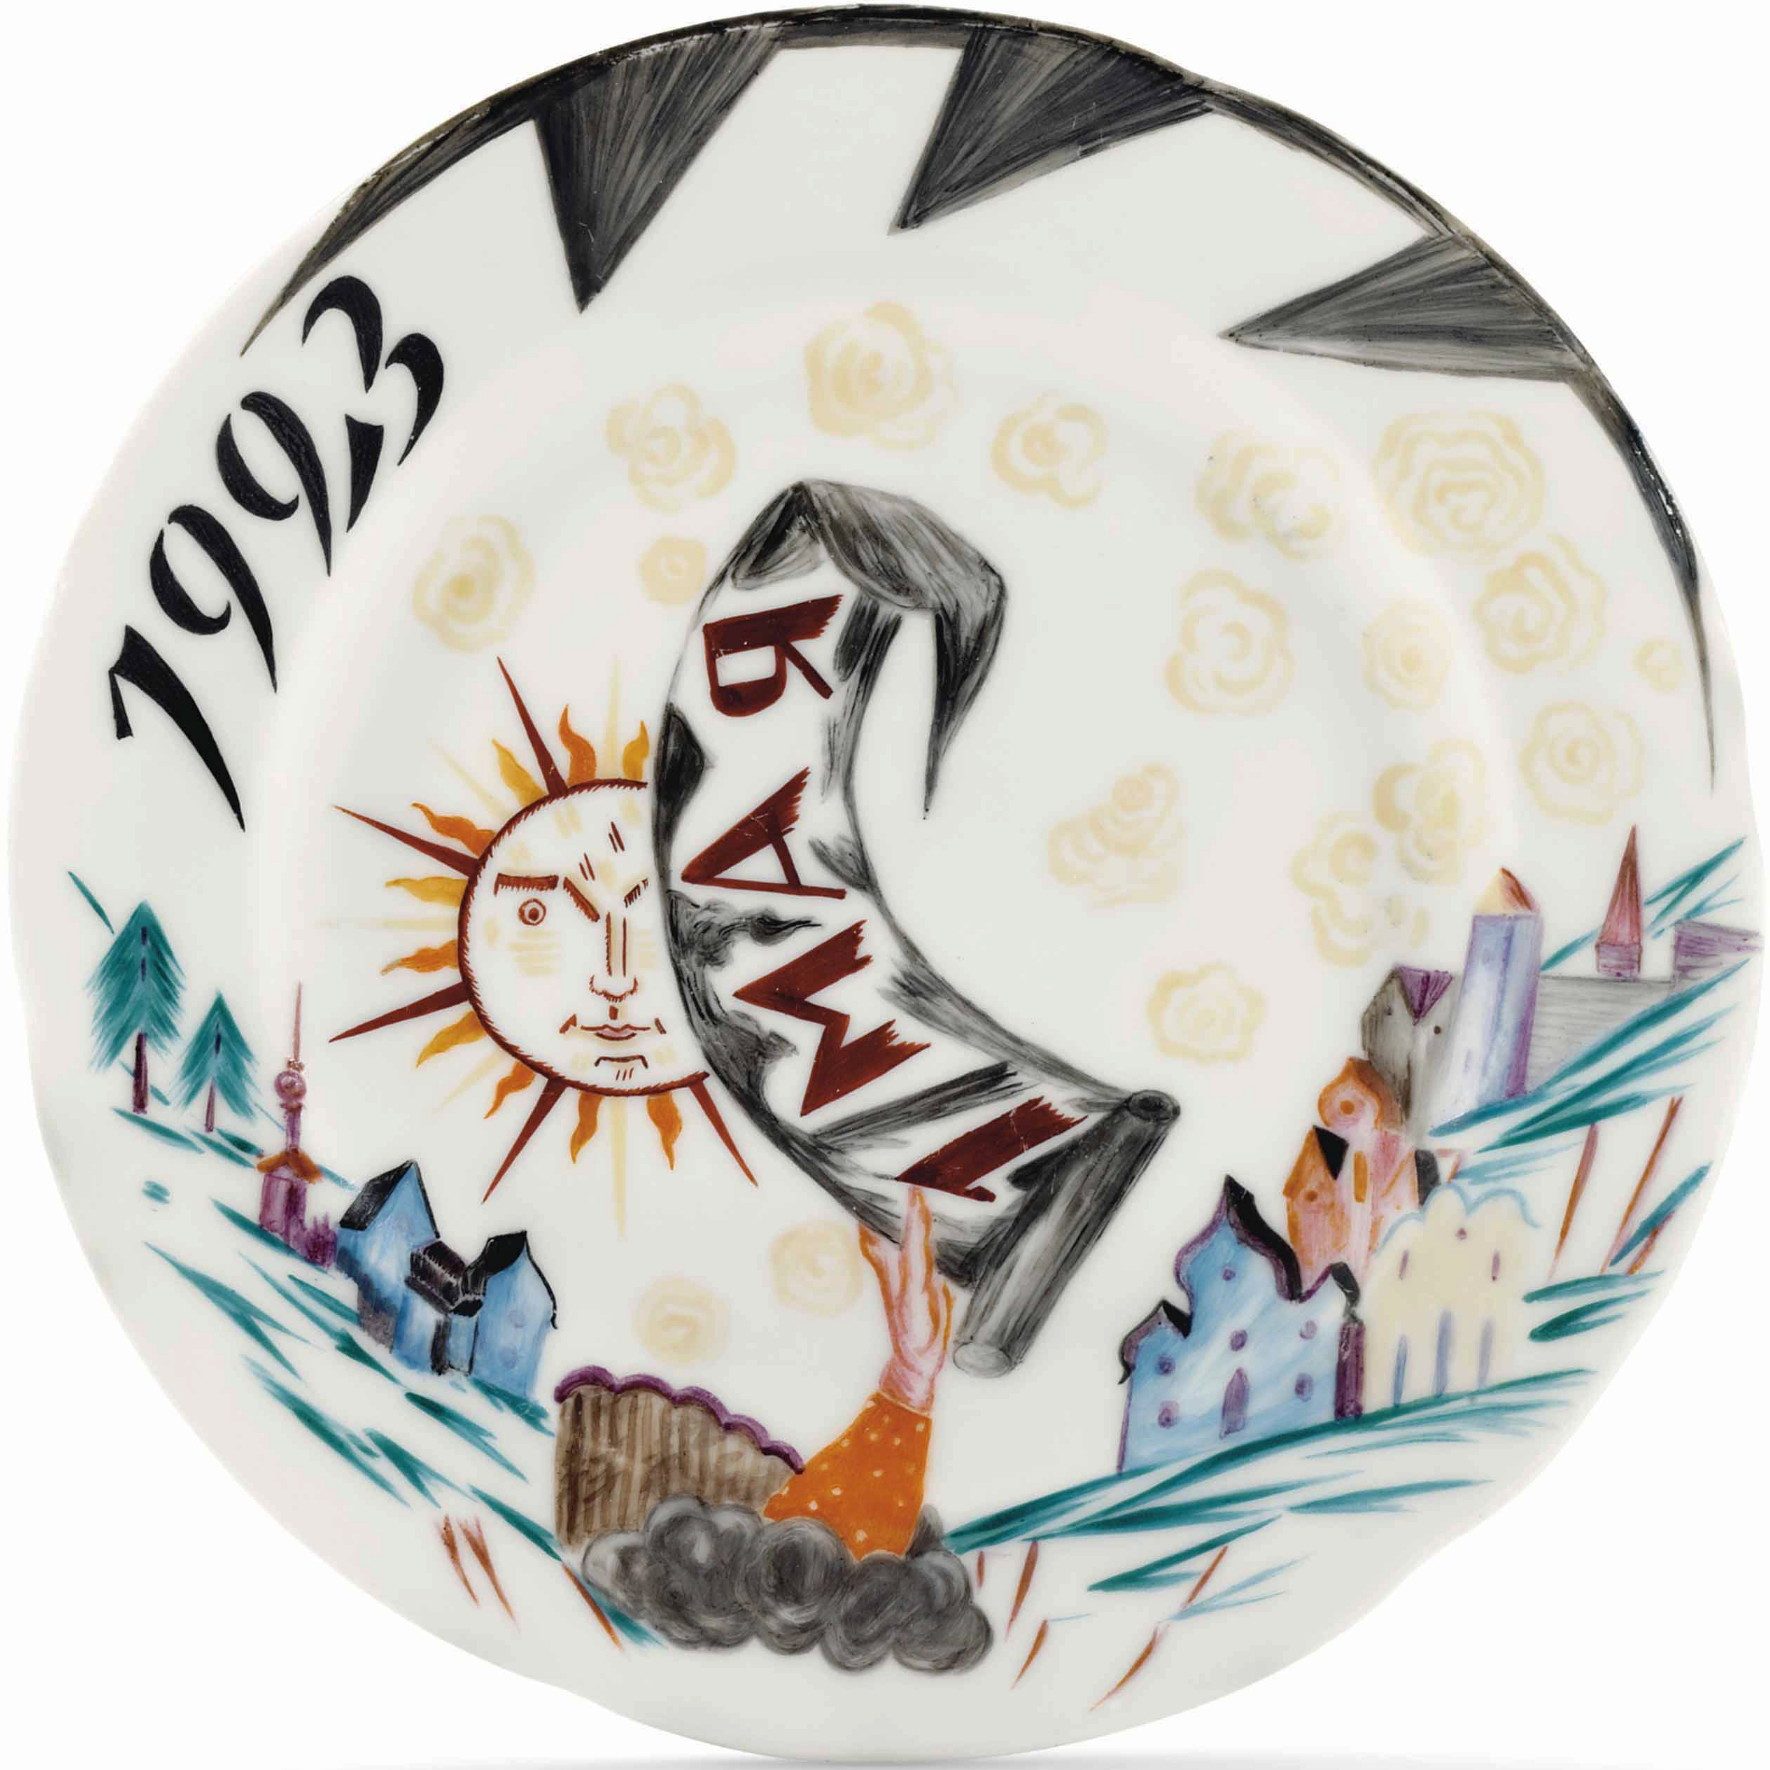 Soviet Propaganda Porcelain Plate "1 May" by Gromov